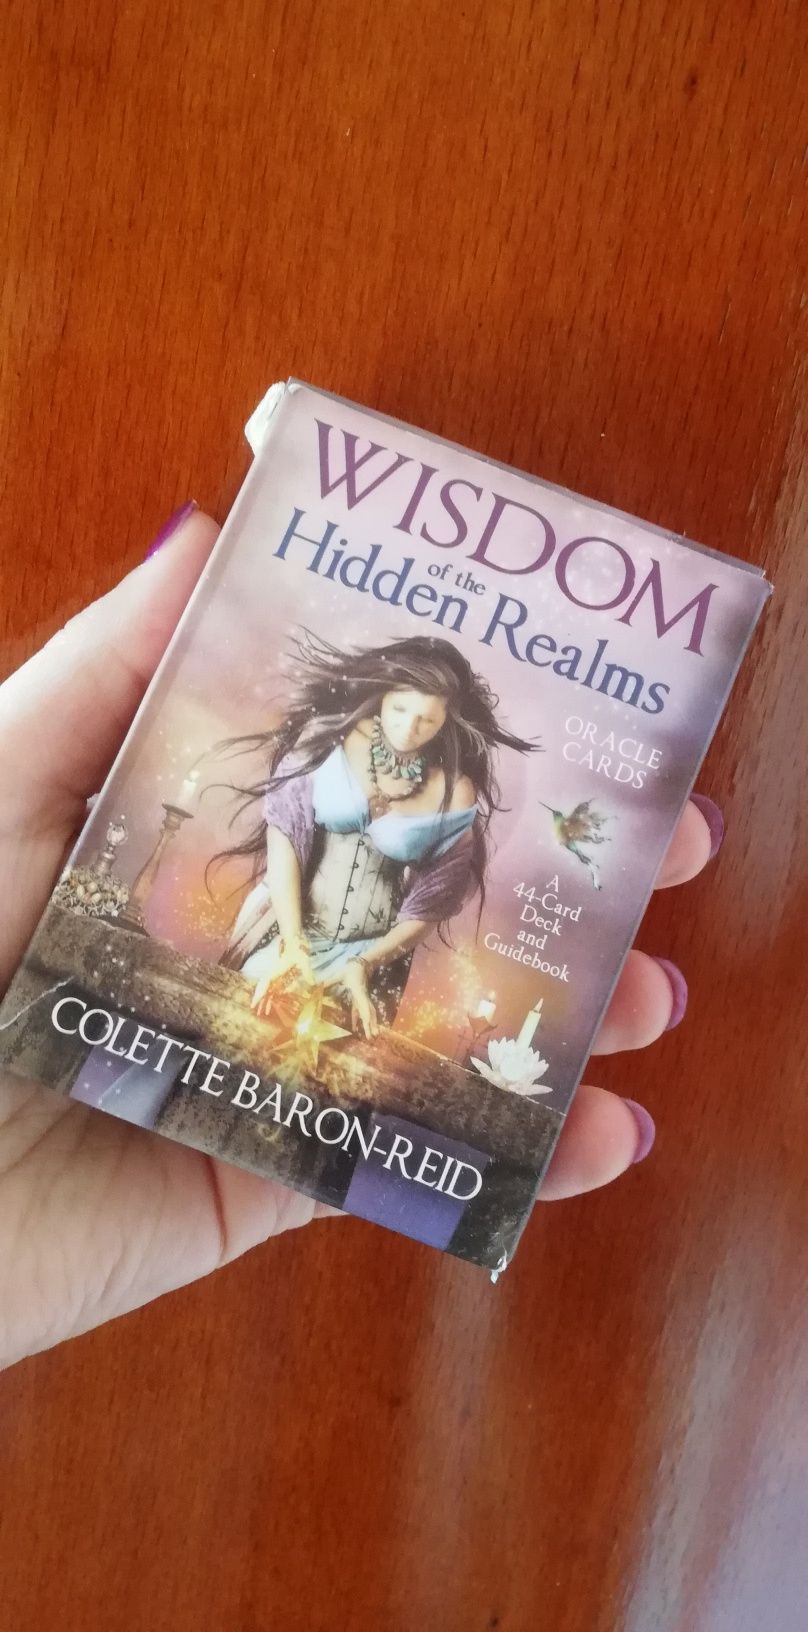 Carti "Wisdom of the hidden realms"